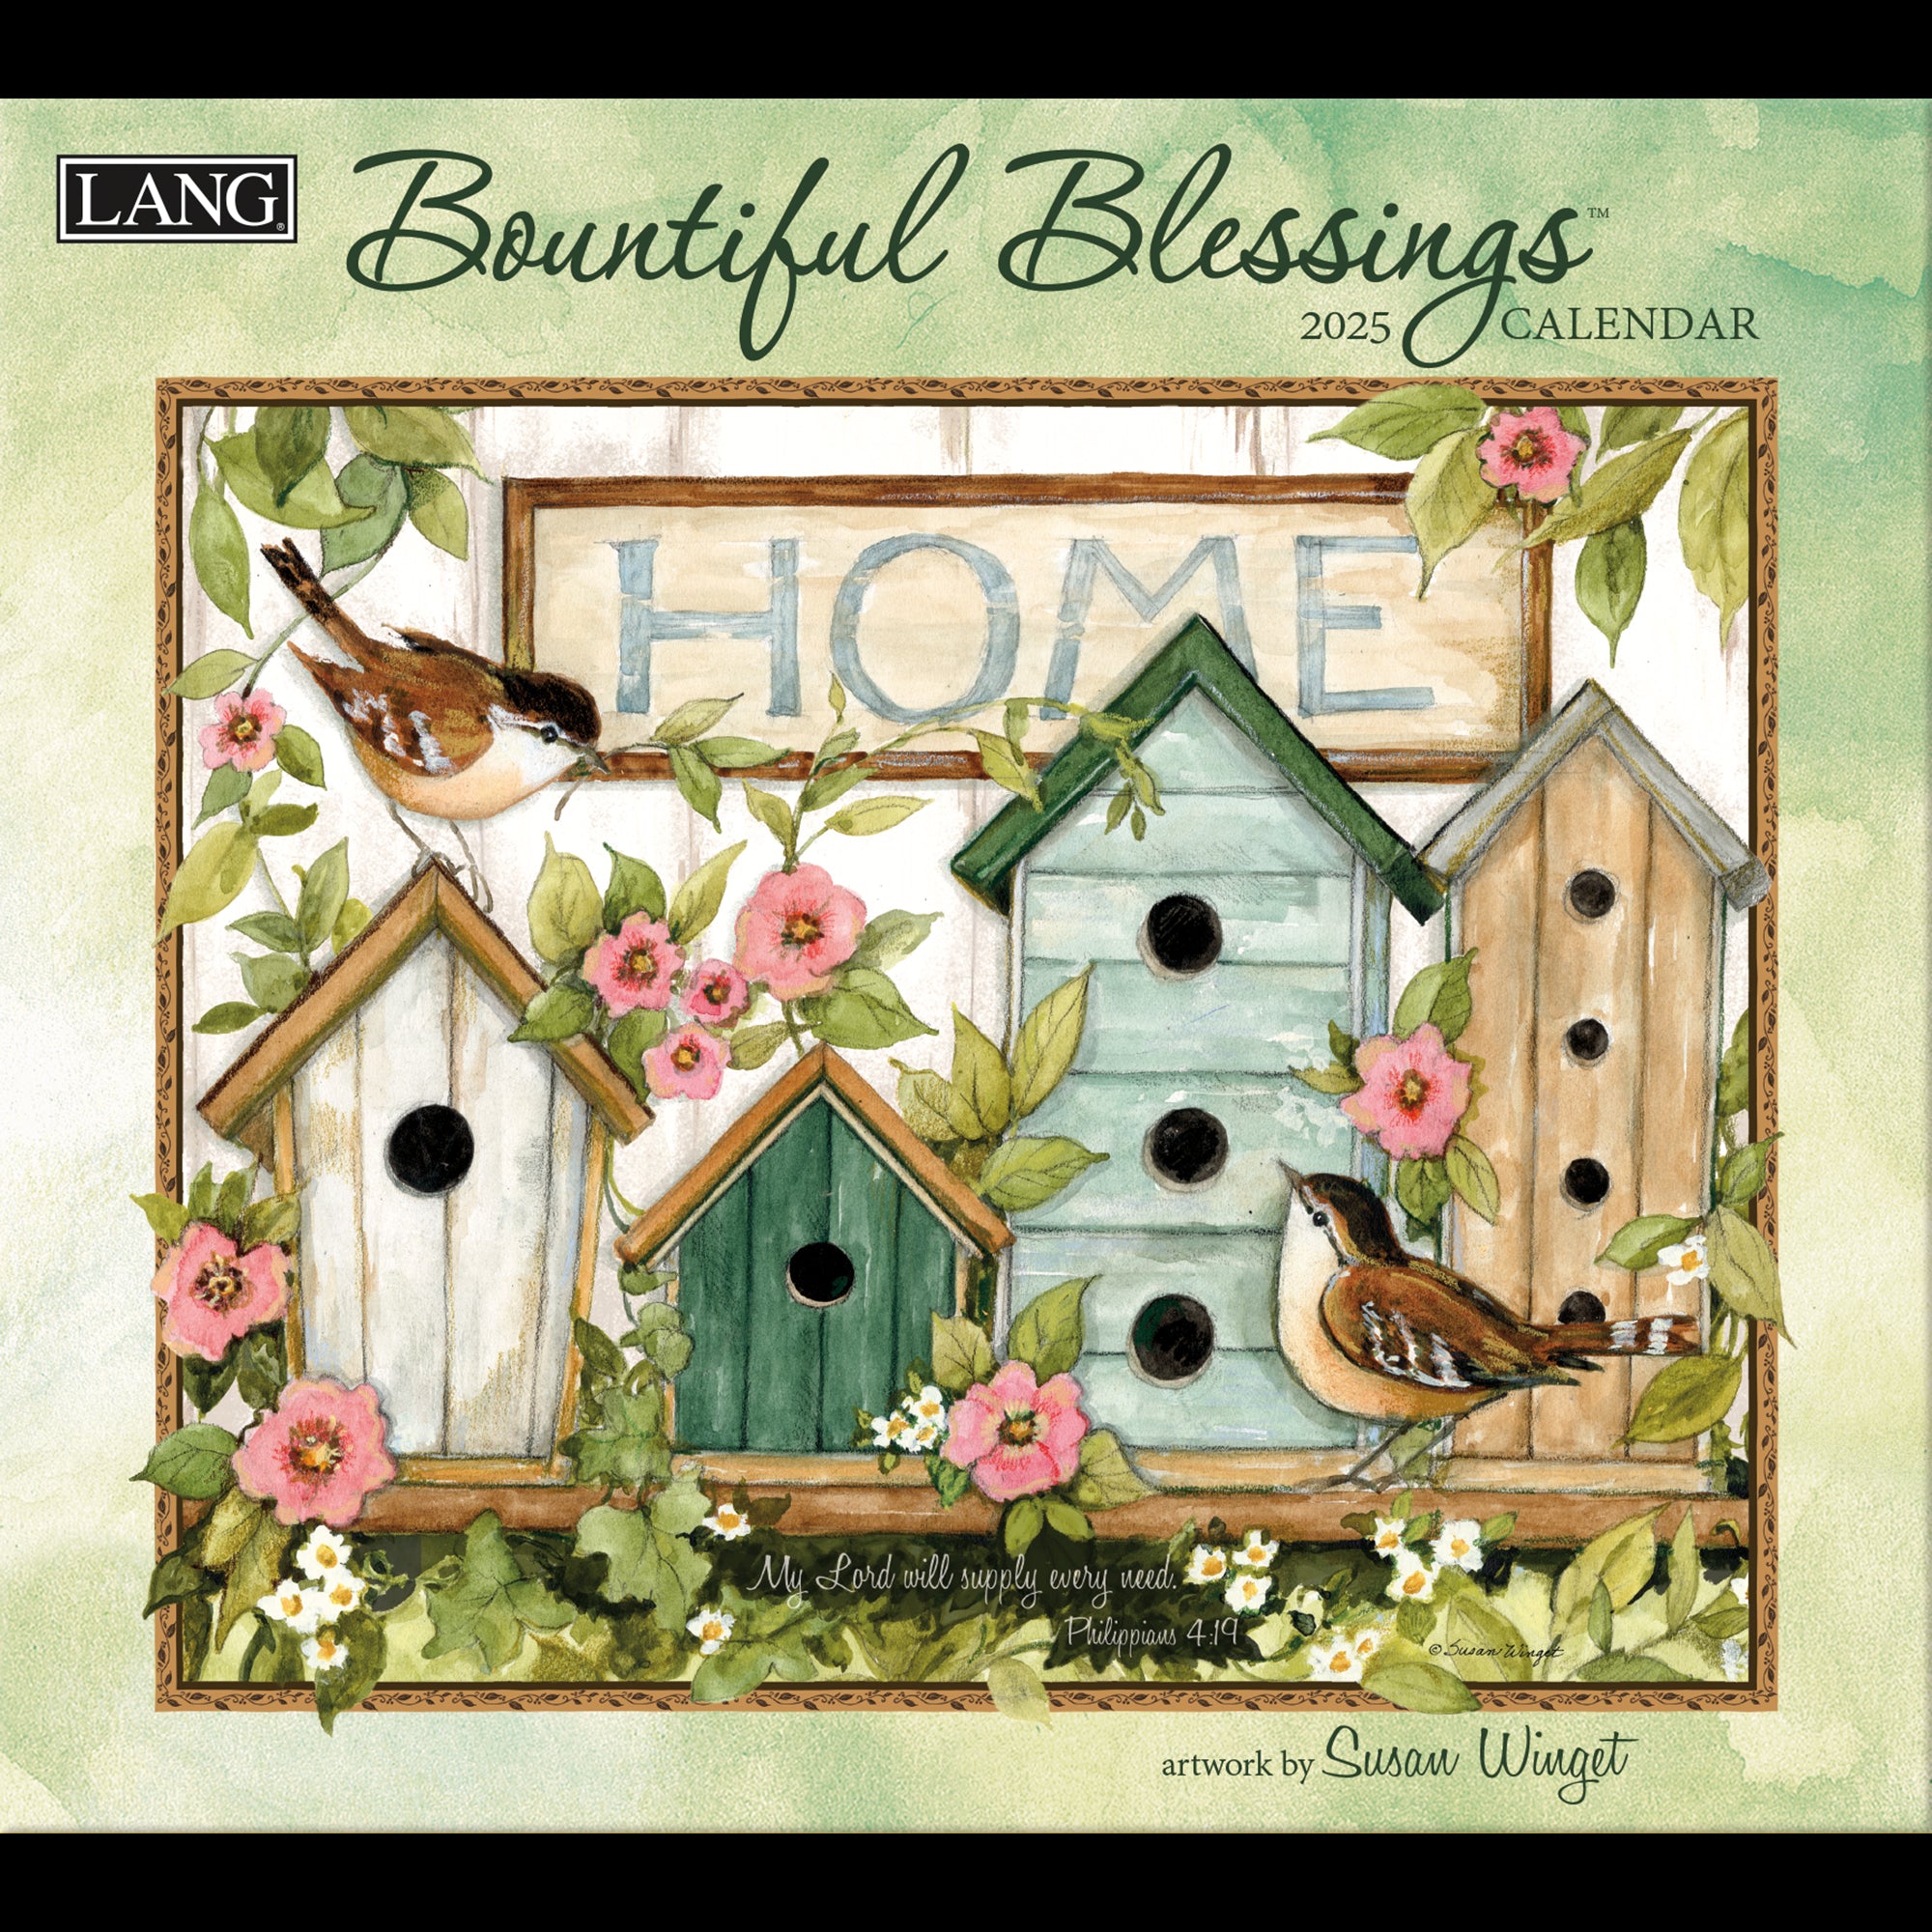 2025 LANG Bountiful Blessings By Susan Winget  - Deluxe Wall Calendar